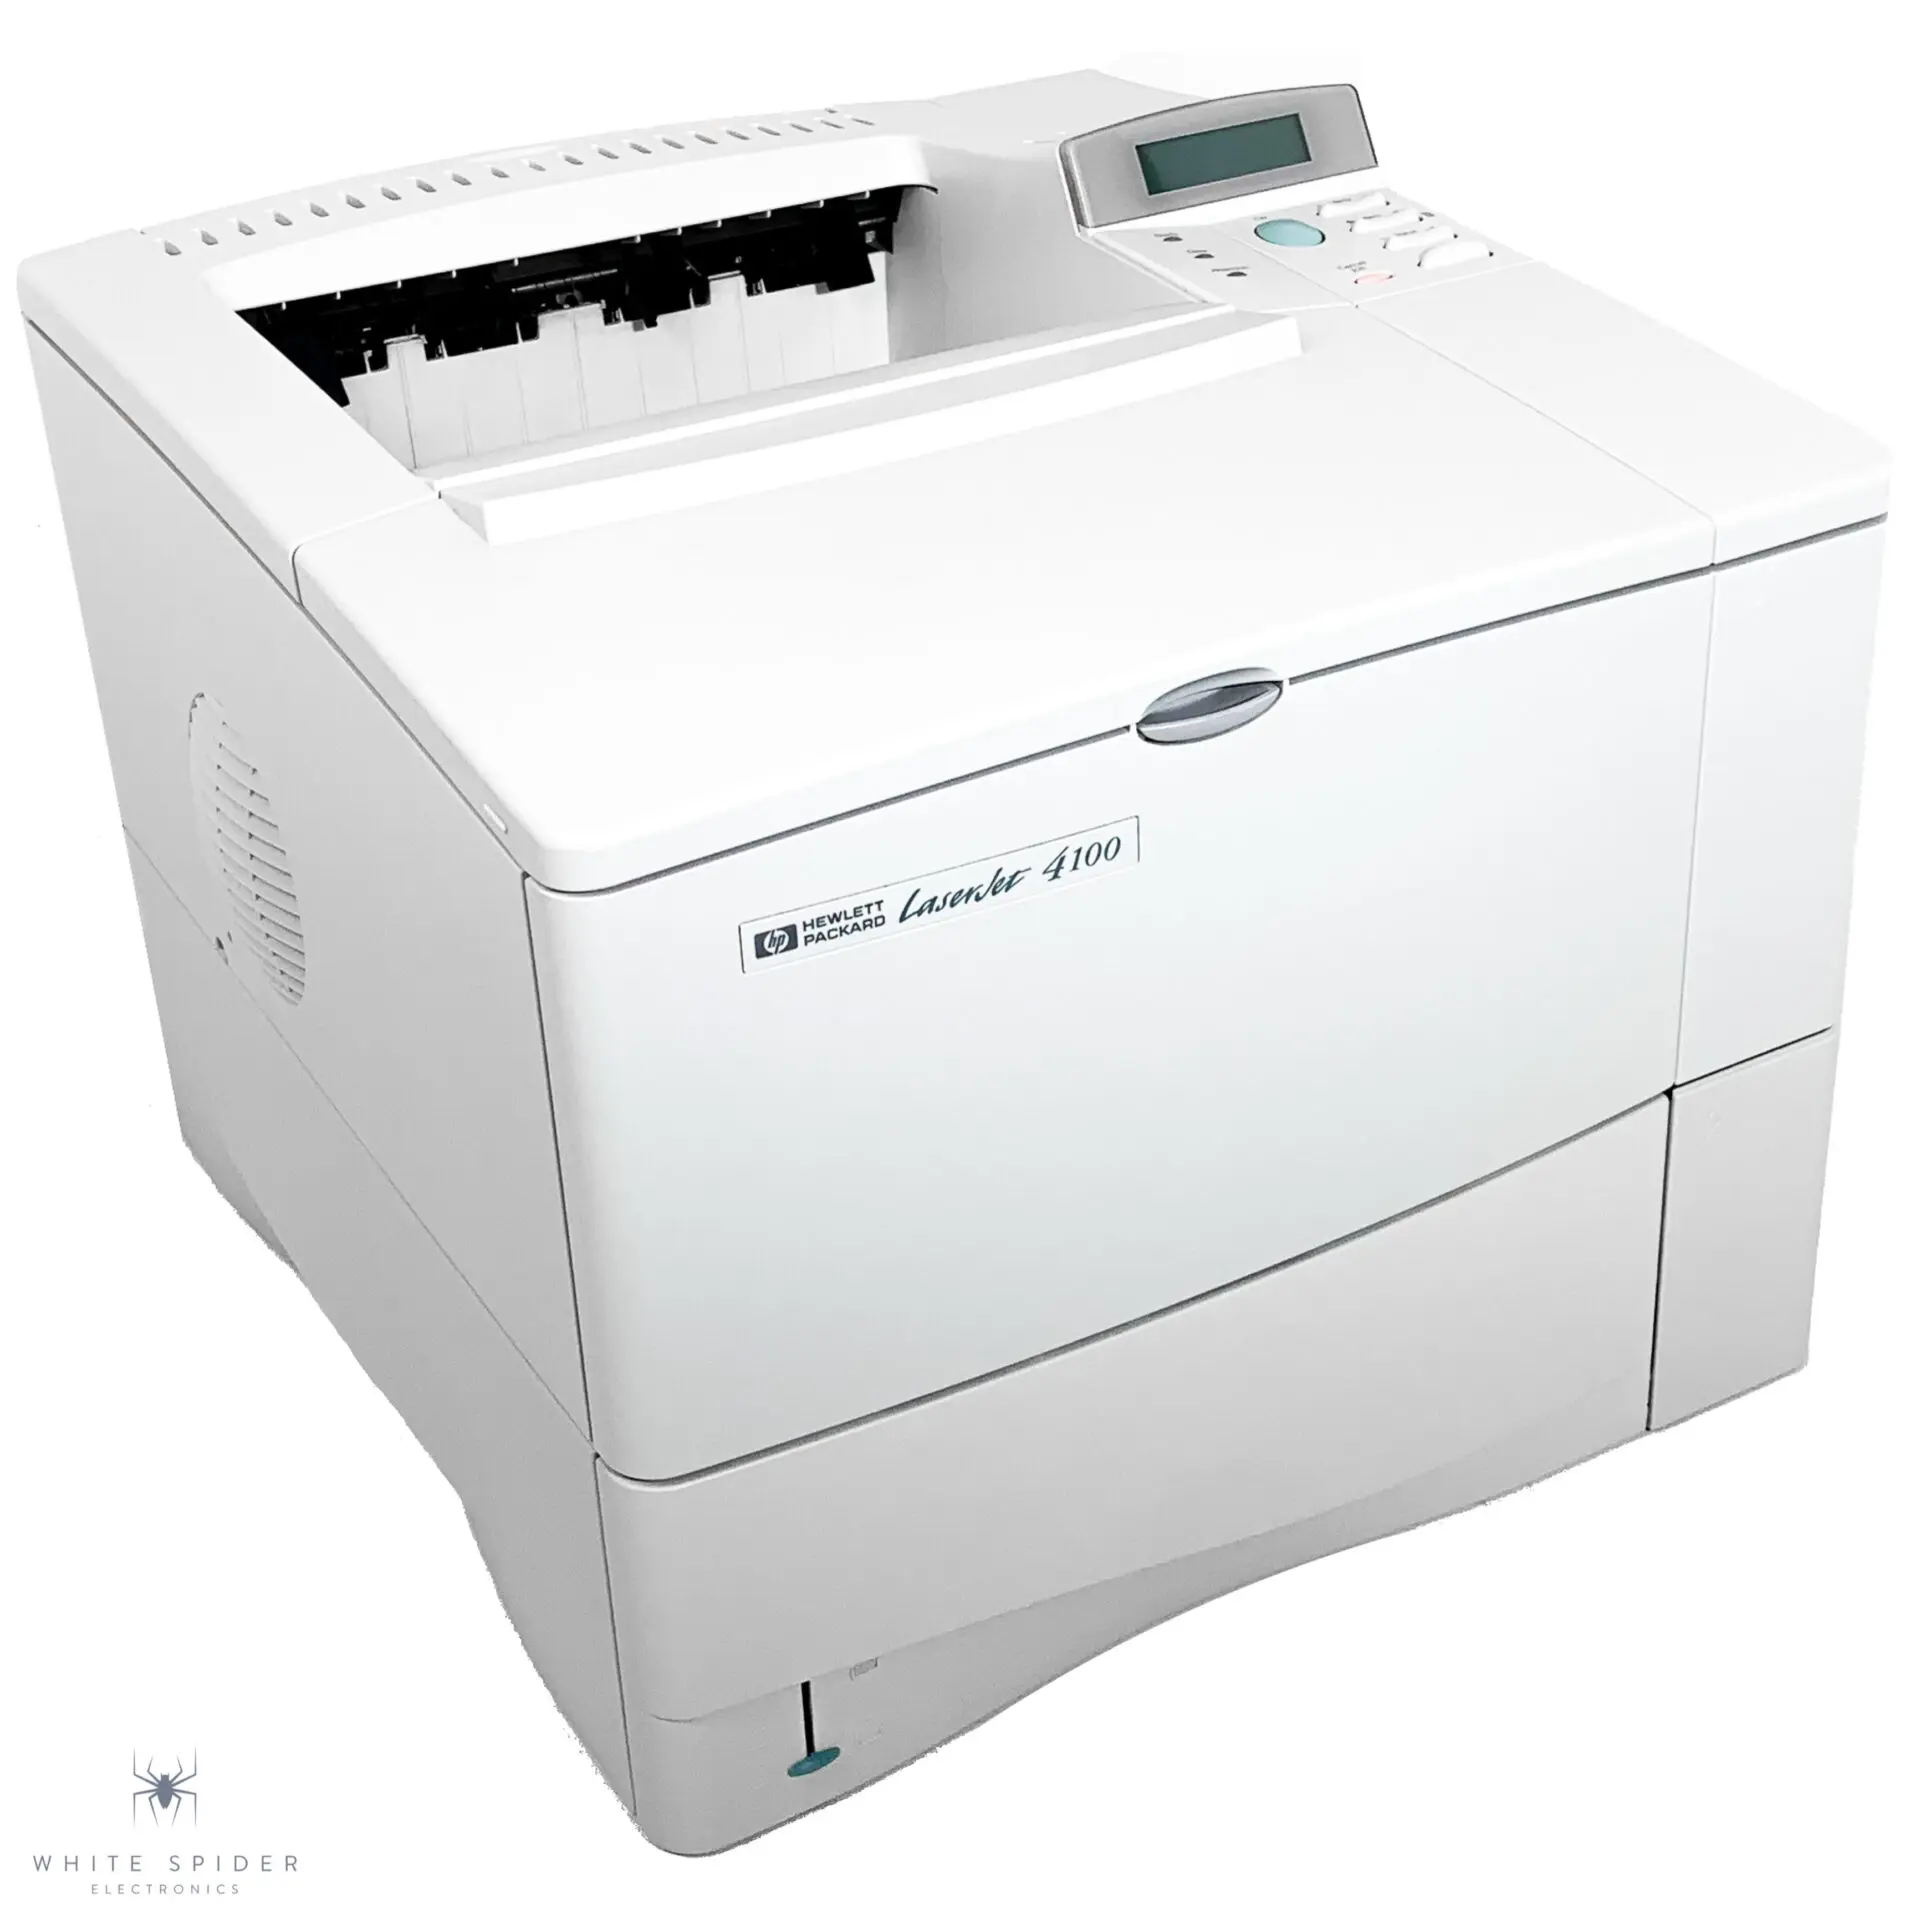 hewlett packard laserjet 4100 driver - How do I install my HP 4100 printer